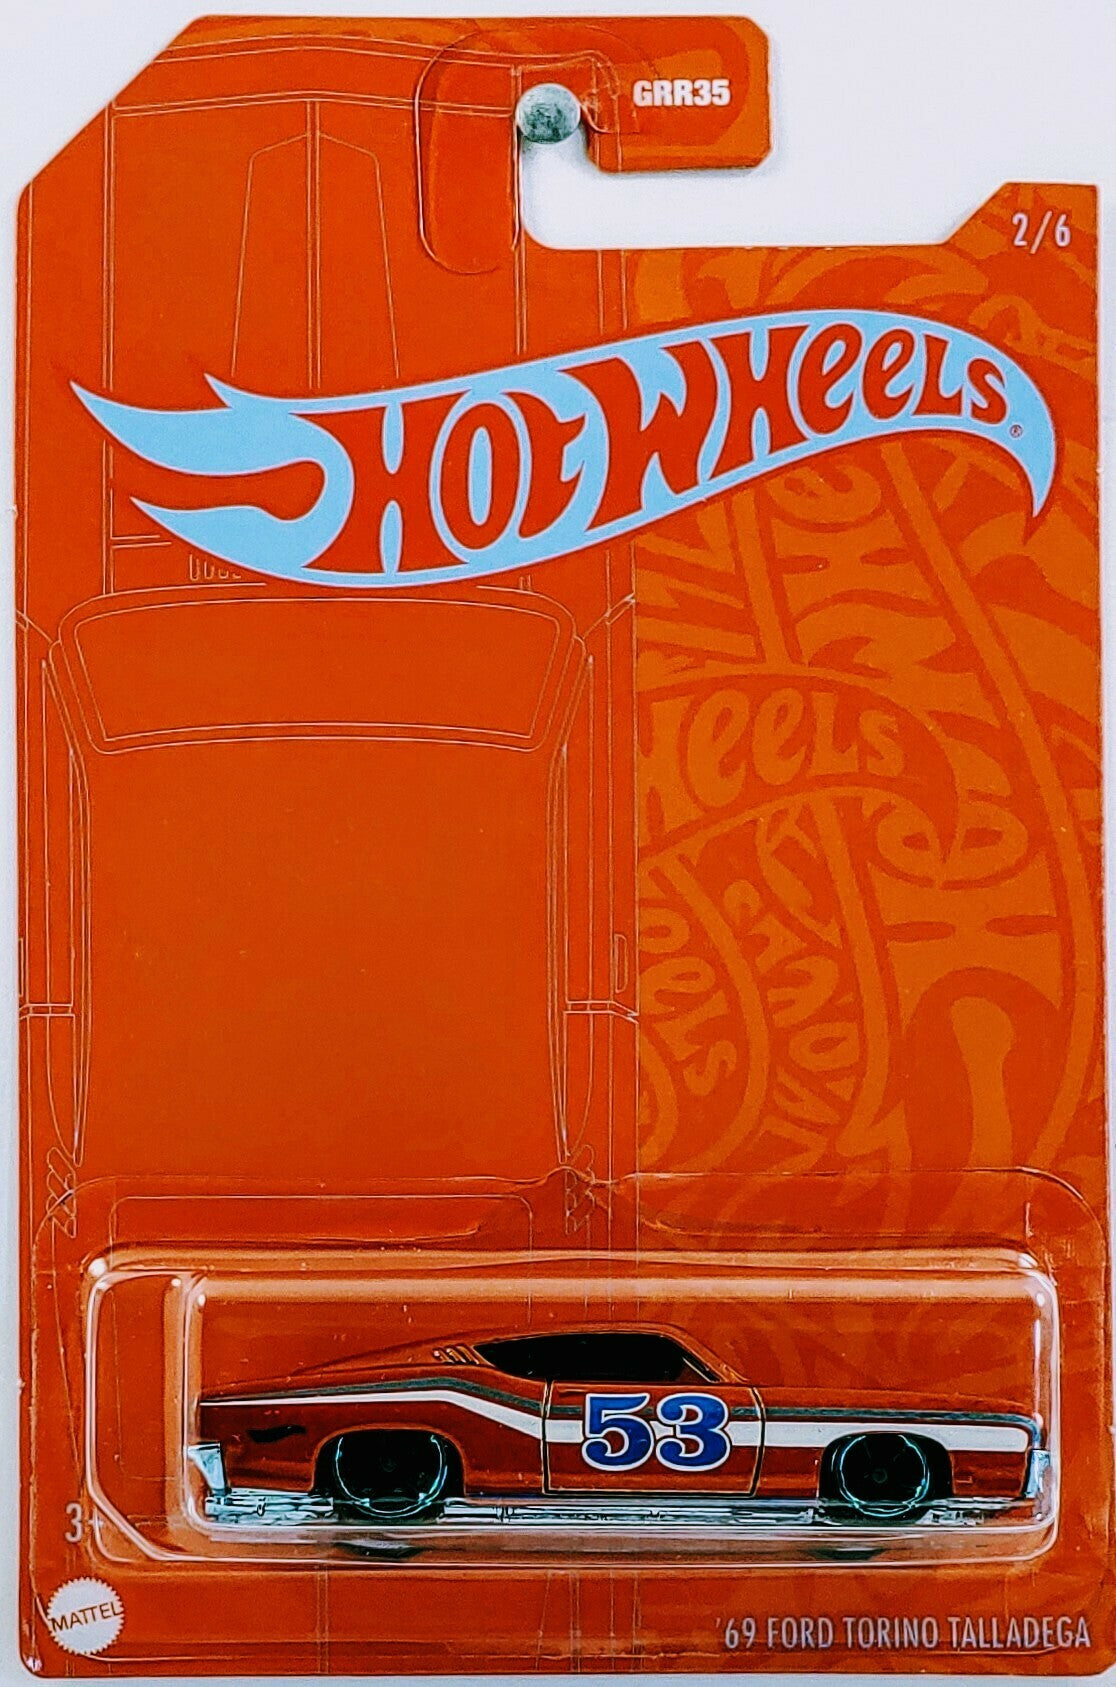 Hot Wheels 2021 - 53rd Anniversary / Orange and Blue / Wave 2 # 2/6 - '69 Ford Torino Talladega - Orange - IC